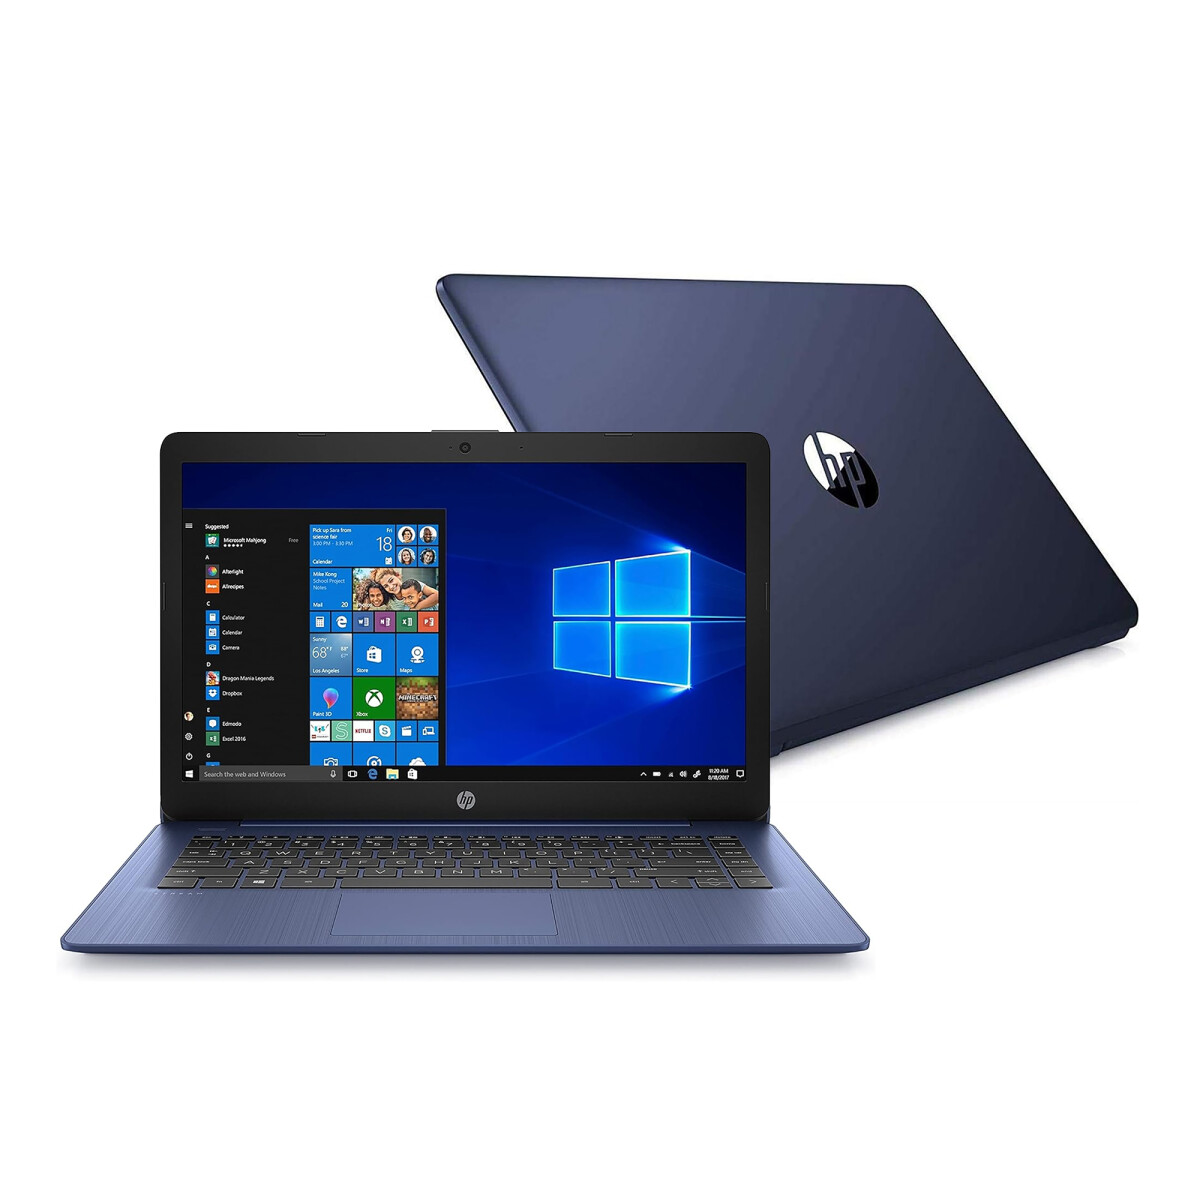 HP - Notebook Stream 14-CB171WM - 14'' Led. Intel Celeron N4000. Intel Uhd 600. Windows 10. Ram 4GB - 001 